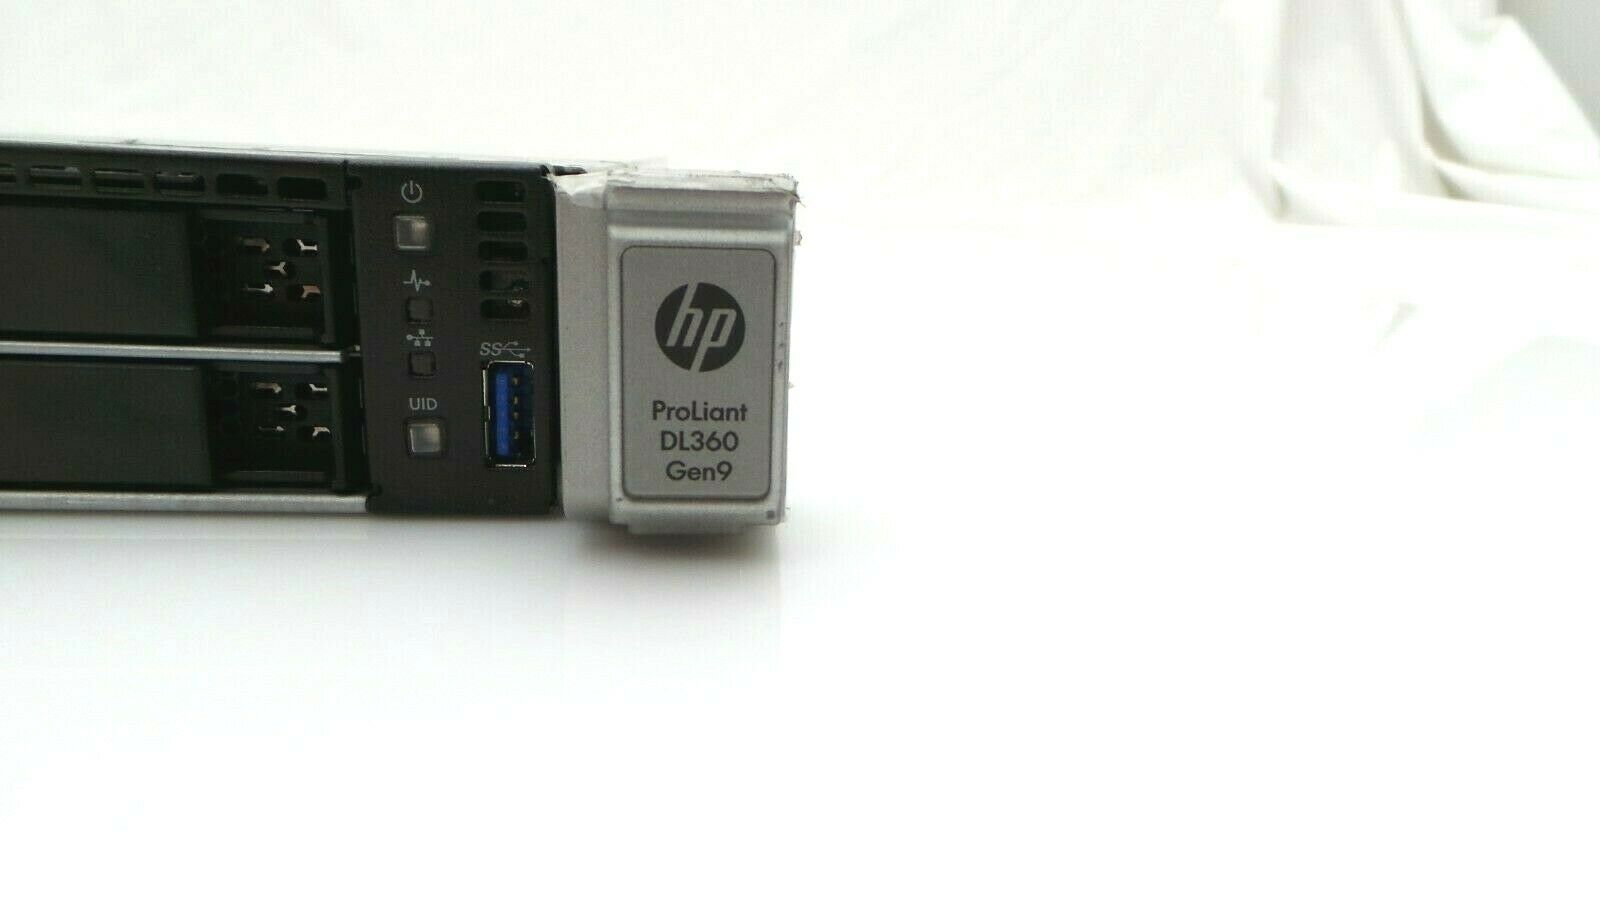 HP DL360G9_300GB ProLiant DL360 G9 Server - 2x 8-Core CPU - 2x 300GB HDD - 2x 500W PSU, Used